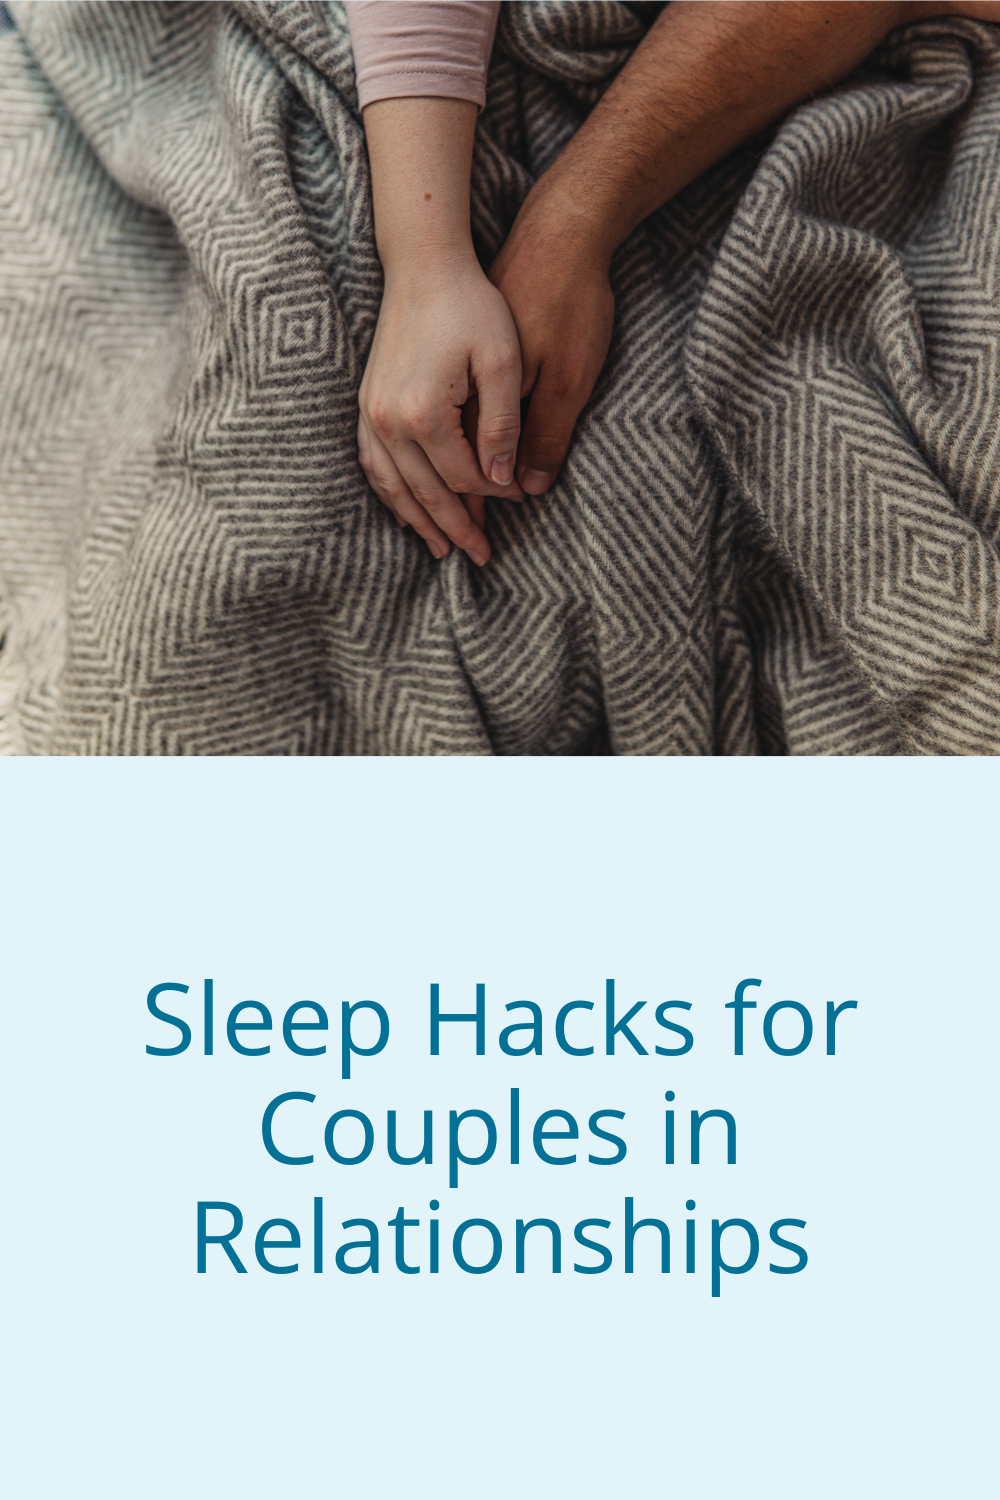 Sleep hacks for couples